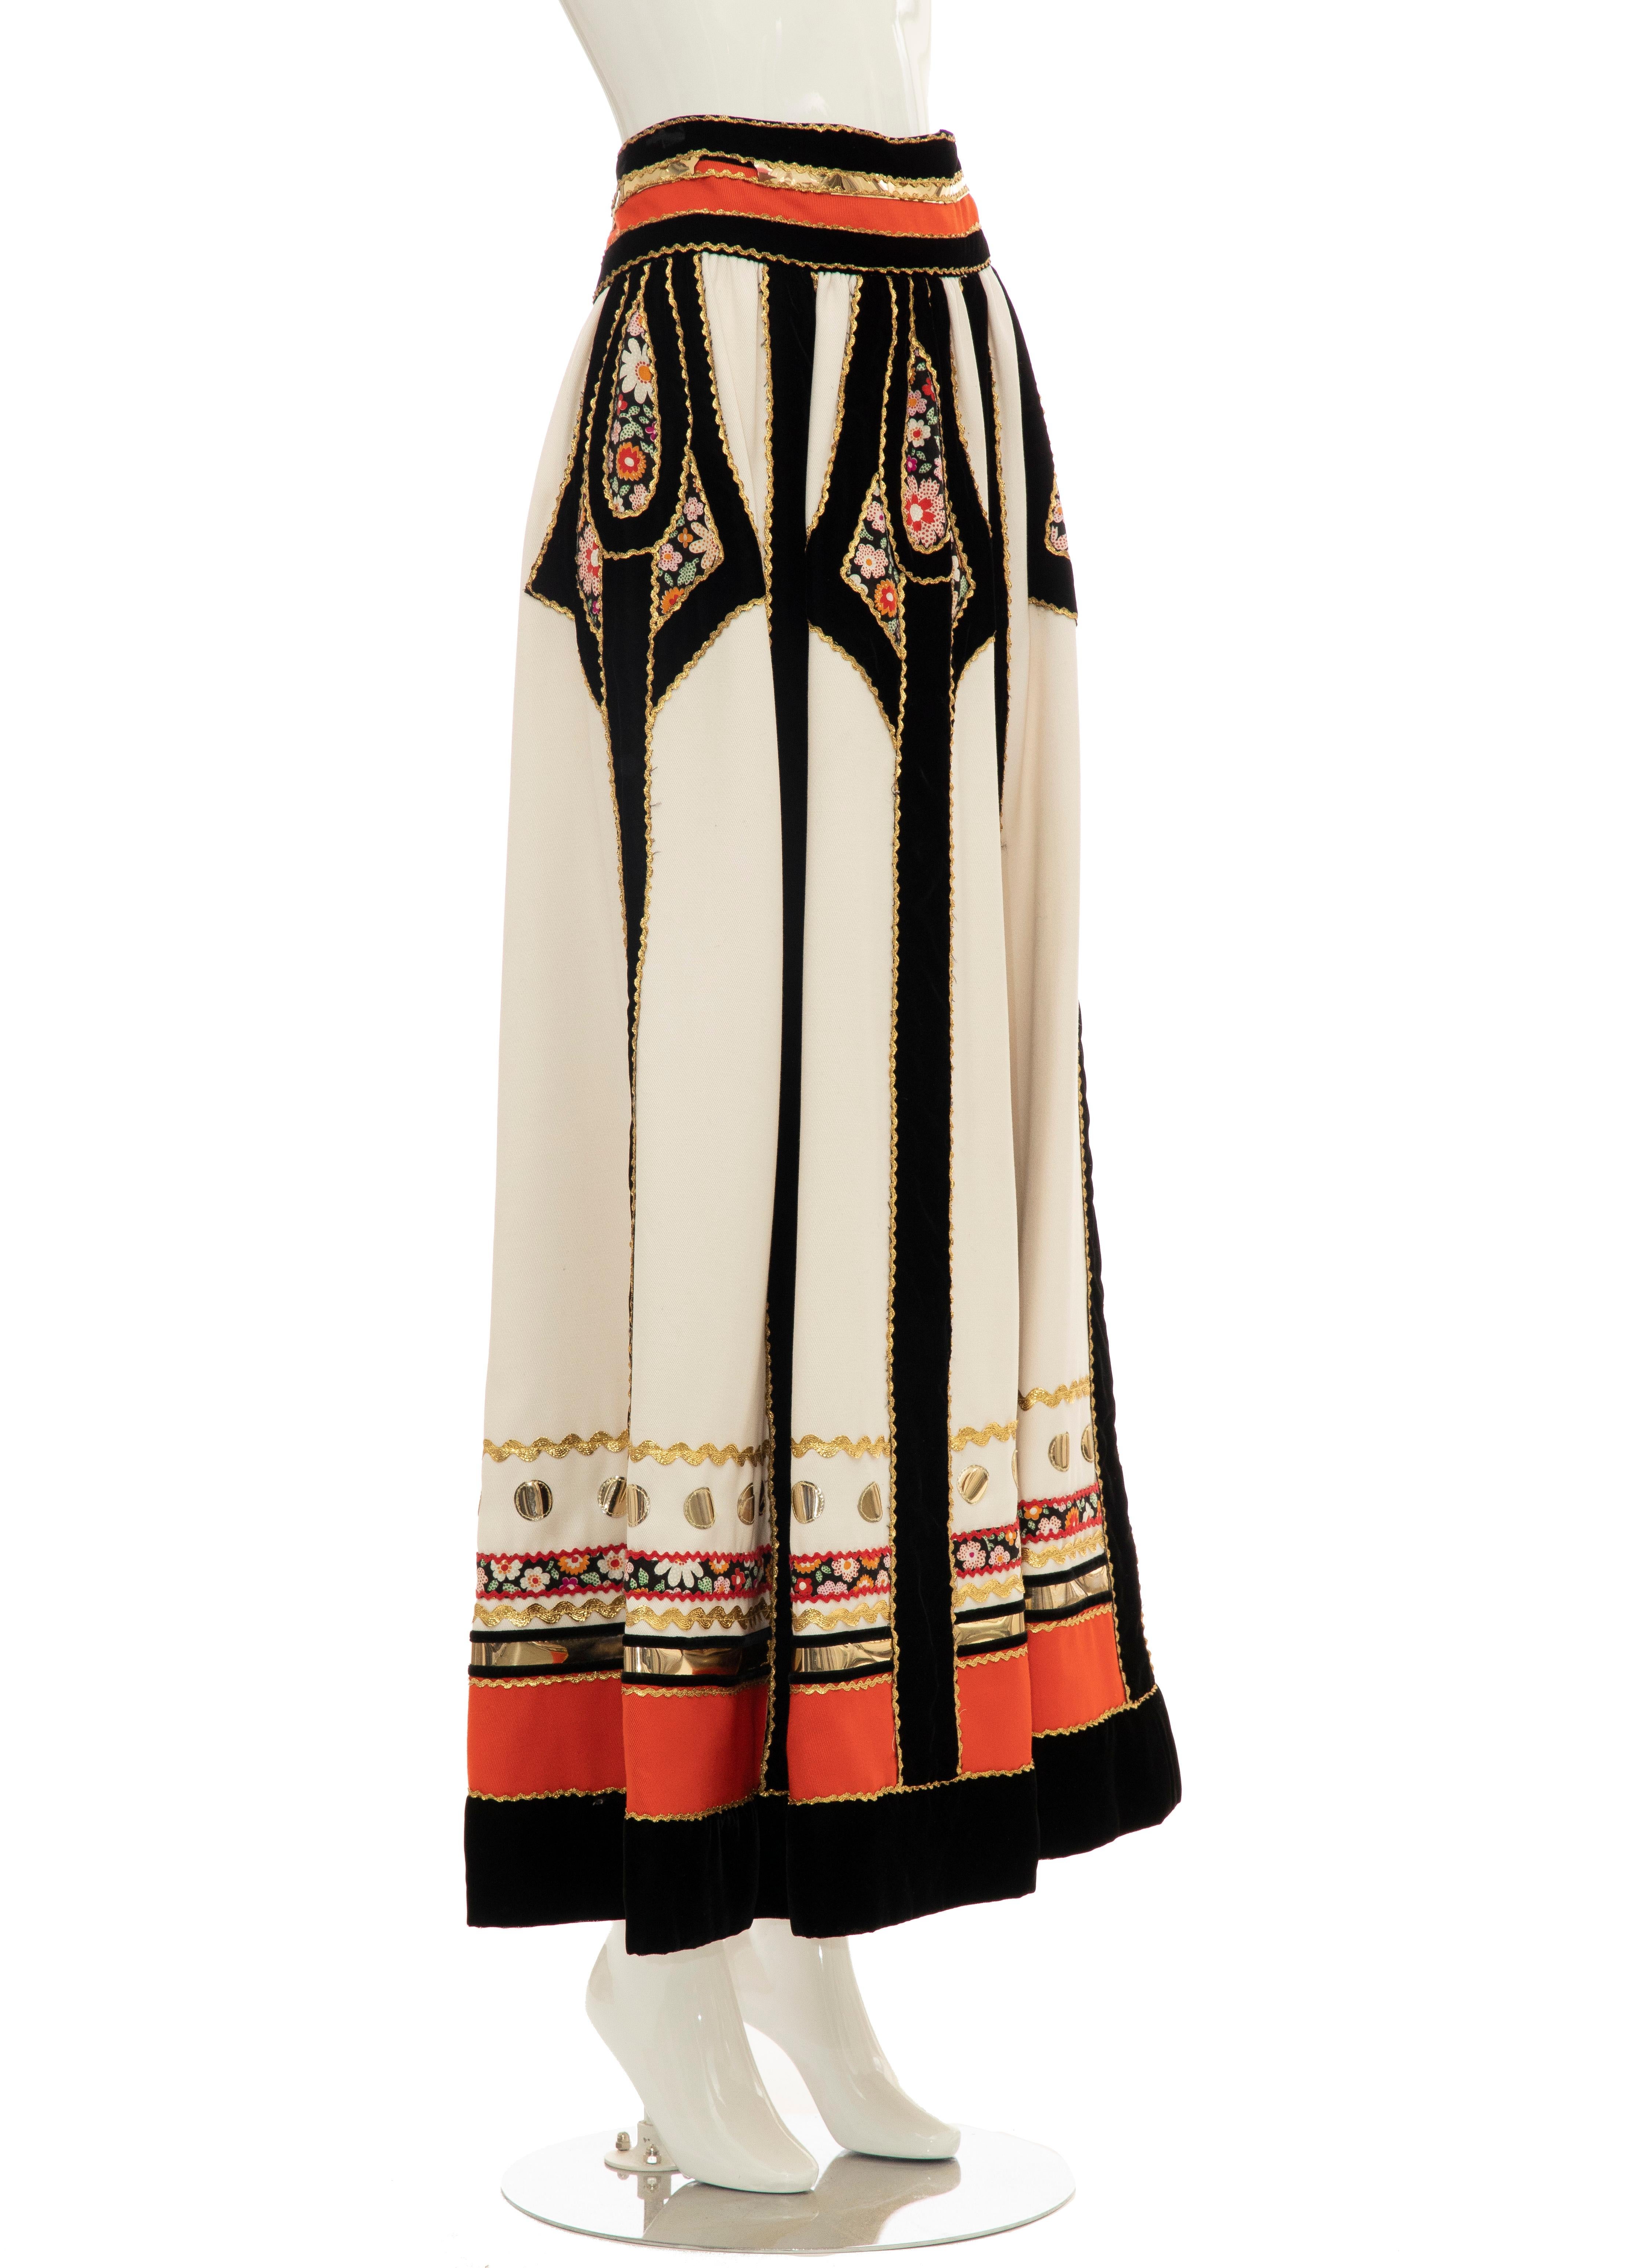 Beige Youssef Rizkallah for Malcolm Starr Caspian Sea Collection Skirt, Circa: 1971